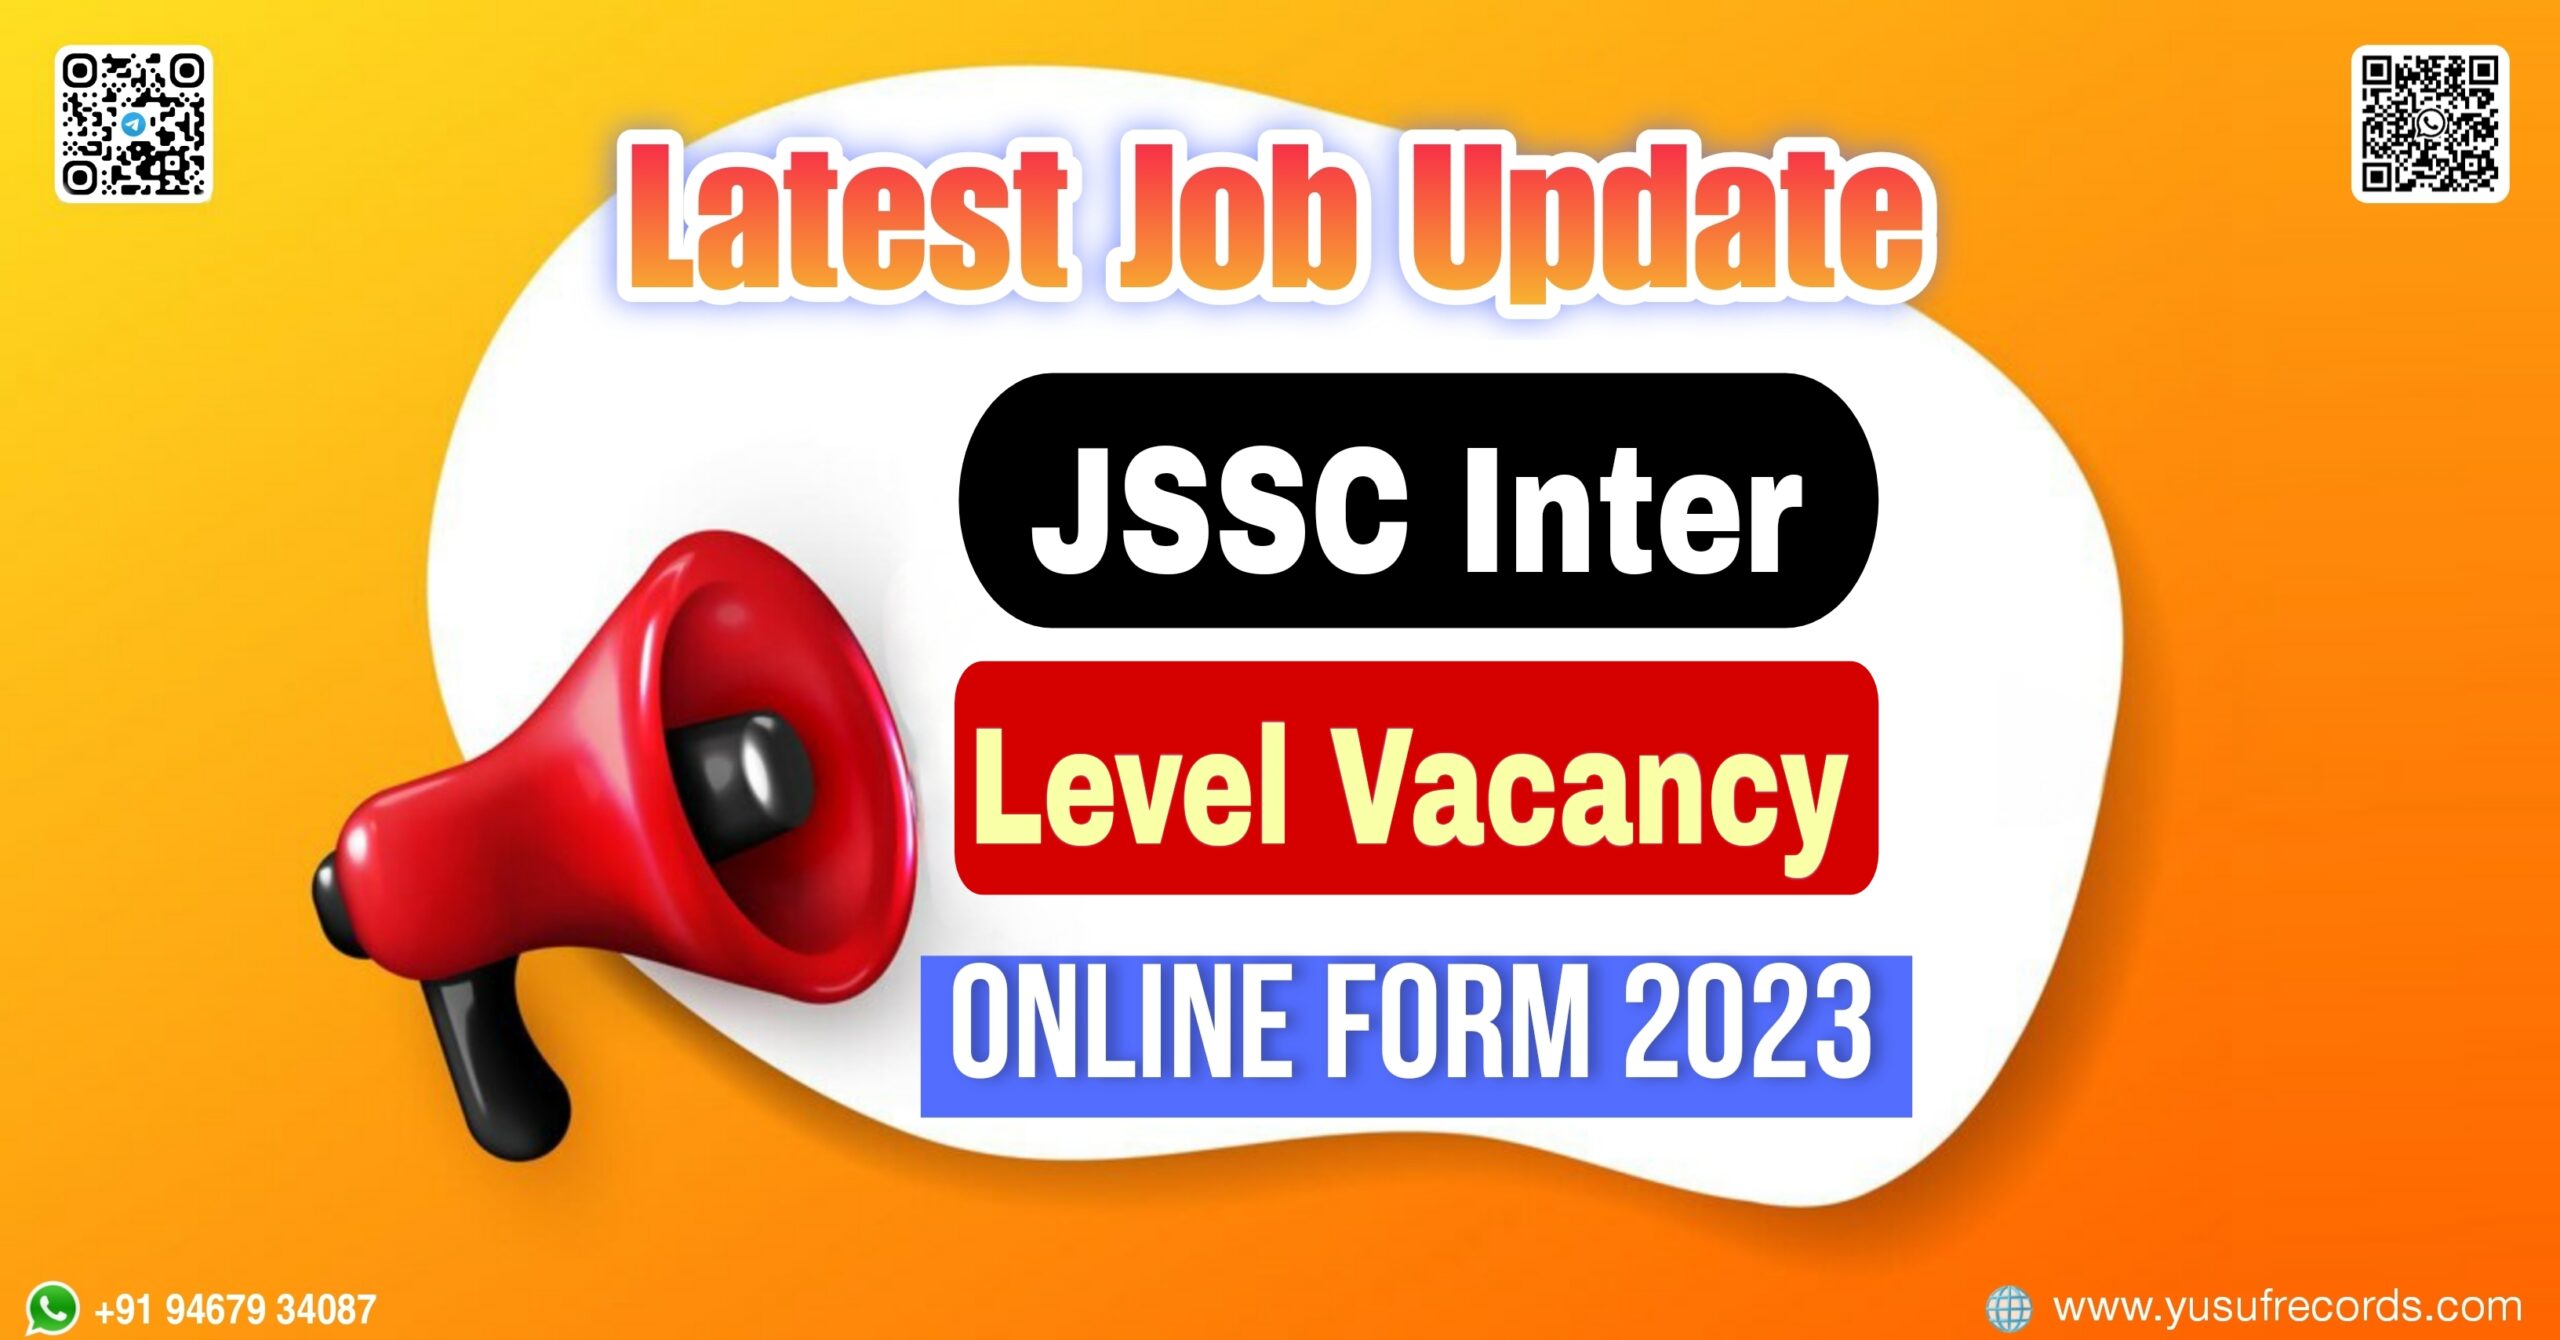 JSSC Inter Level Vacancy Online Form 2023 yusufrecords